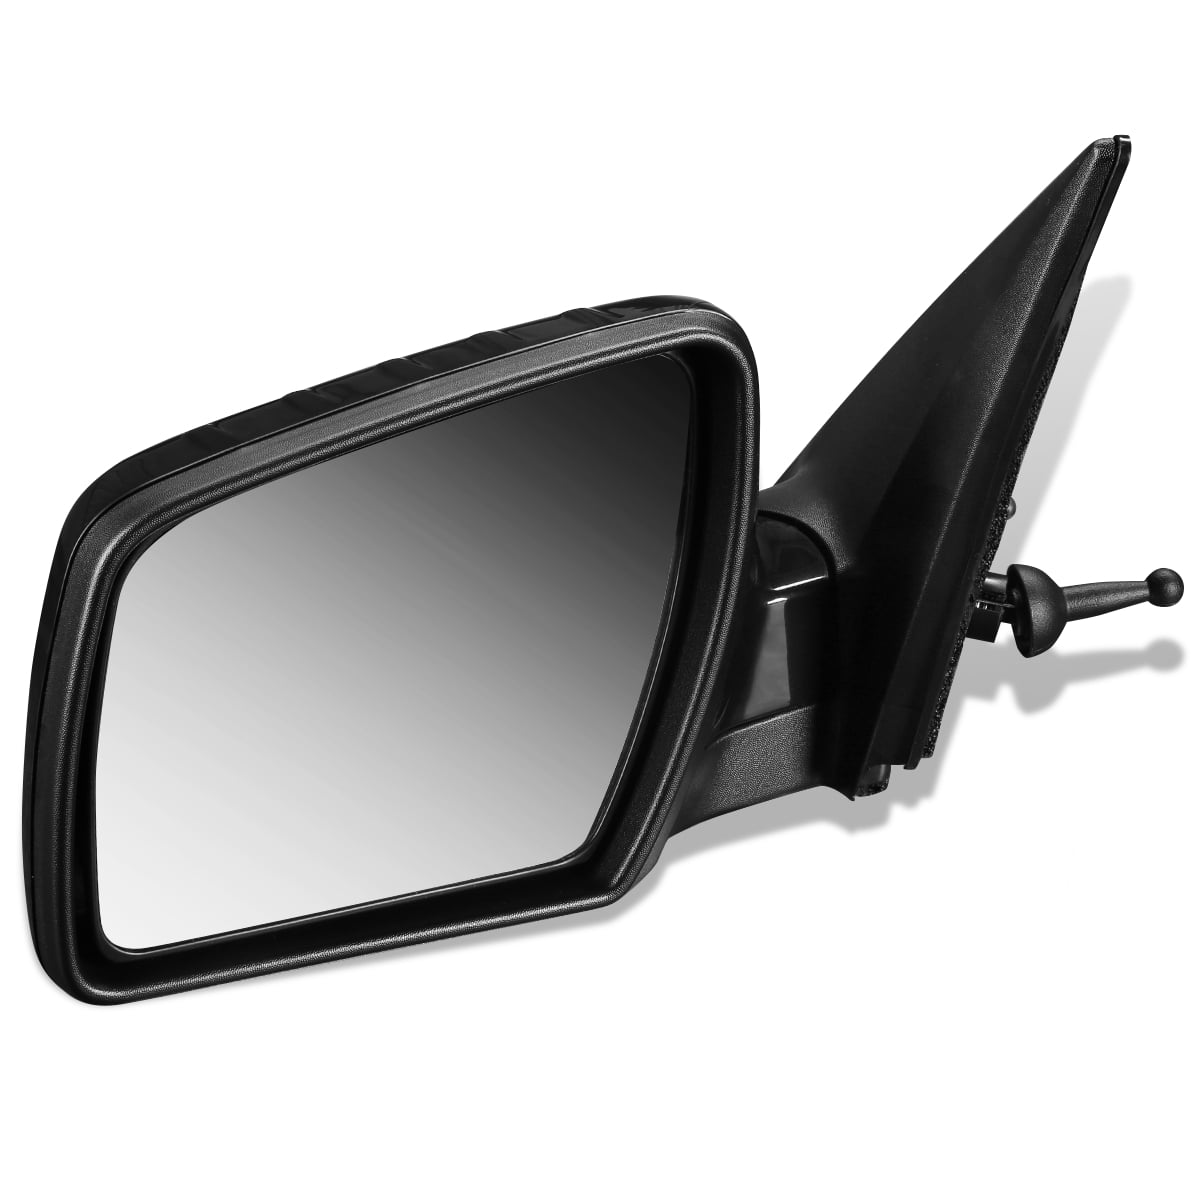 New Left Door Mirror Fits Kia Rio 2012-2013 Manual Folding